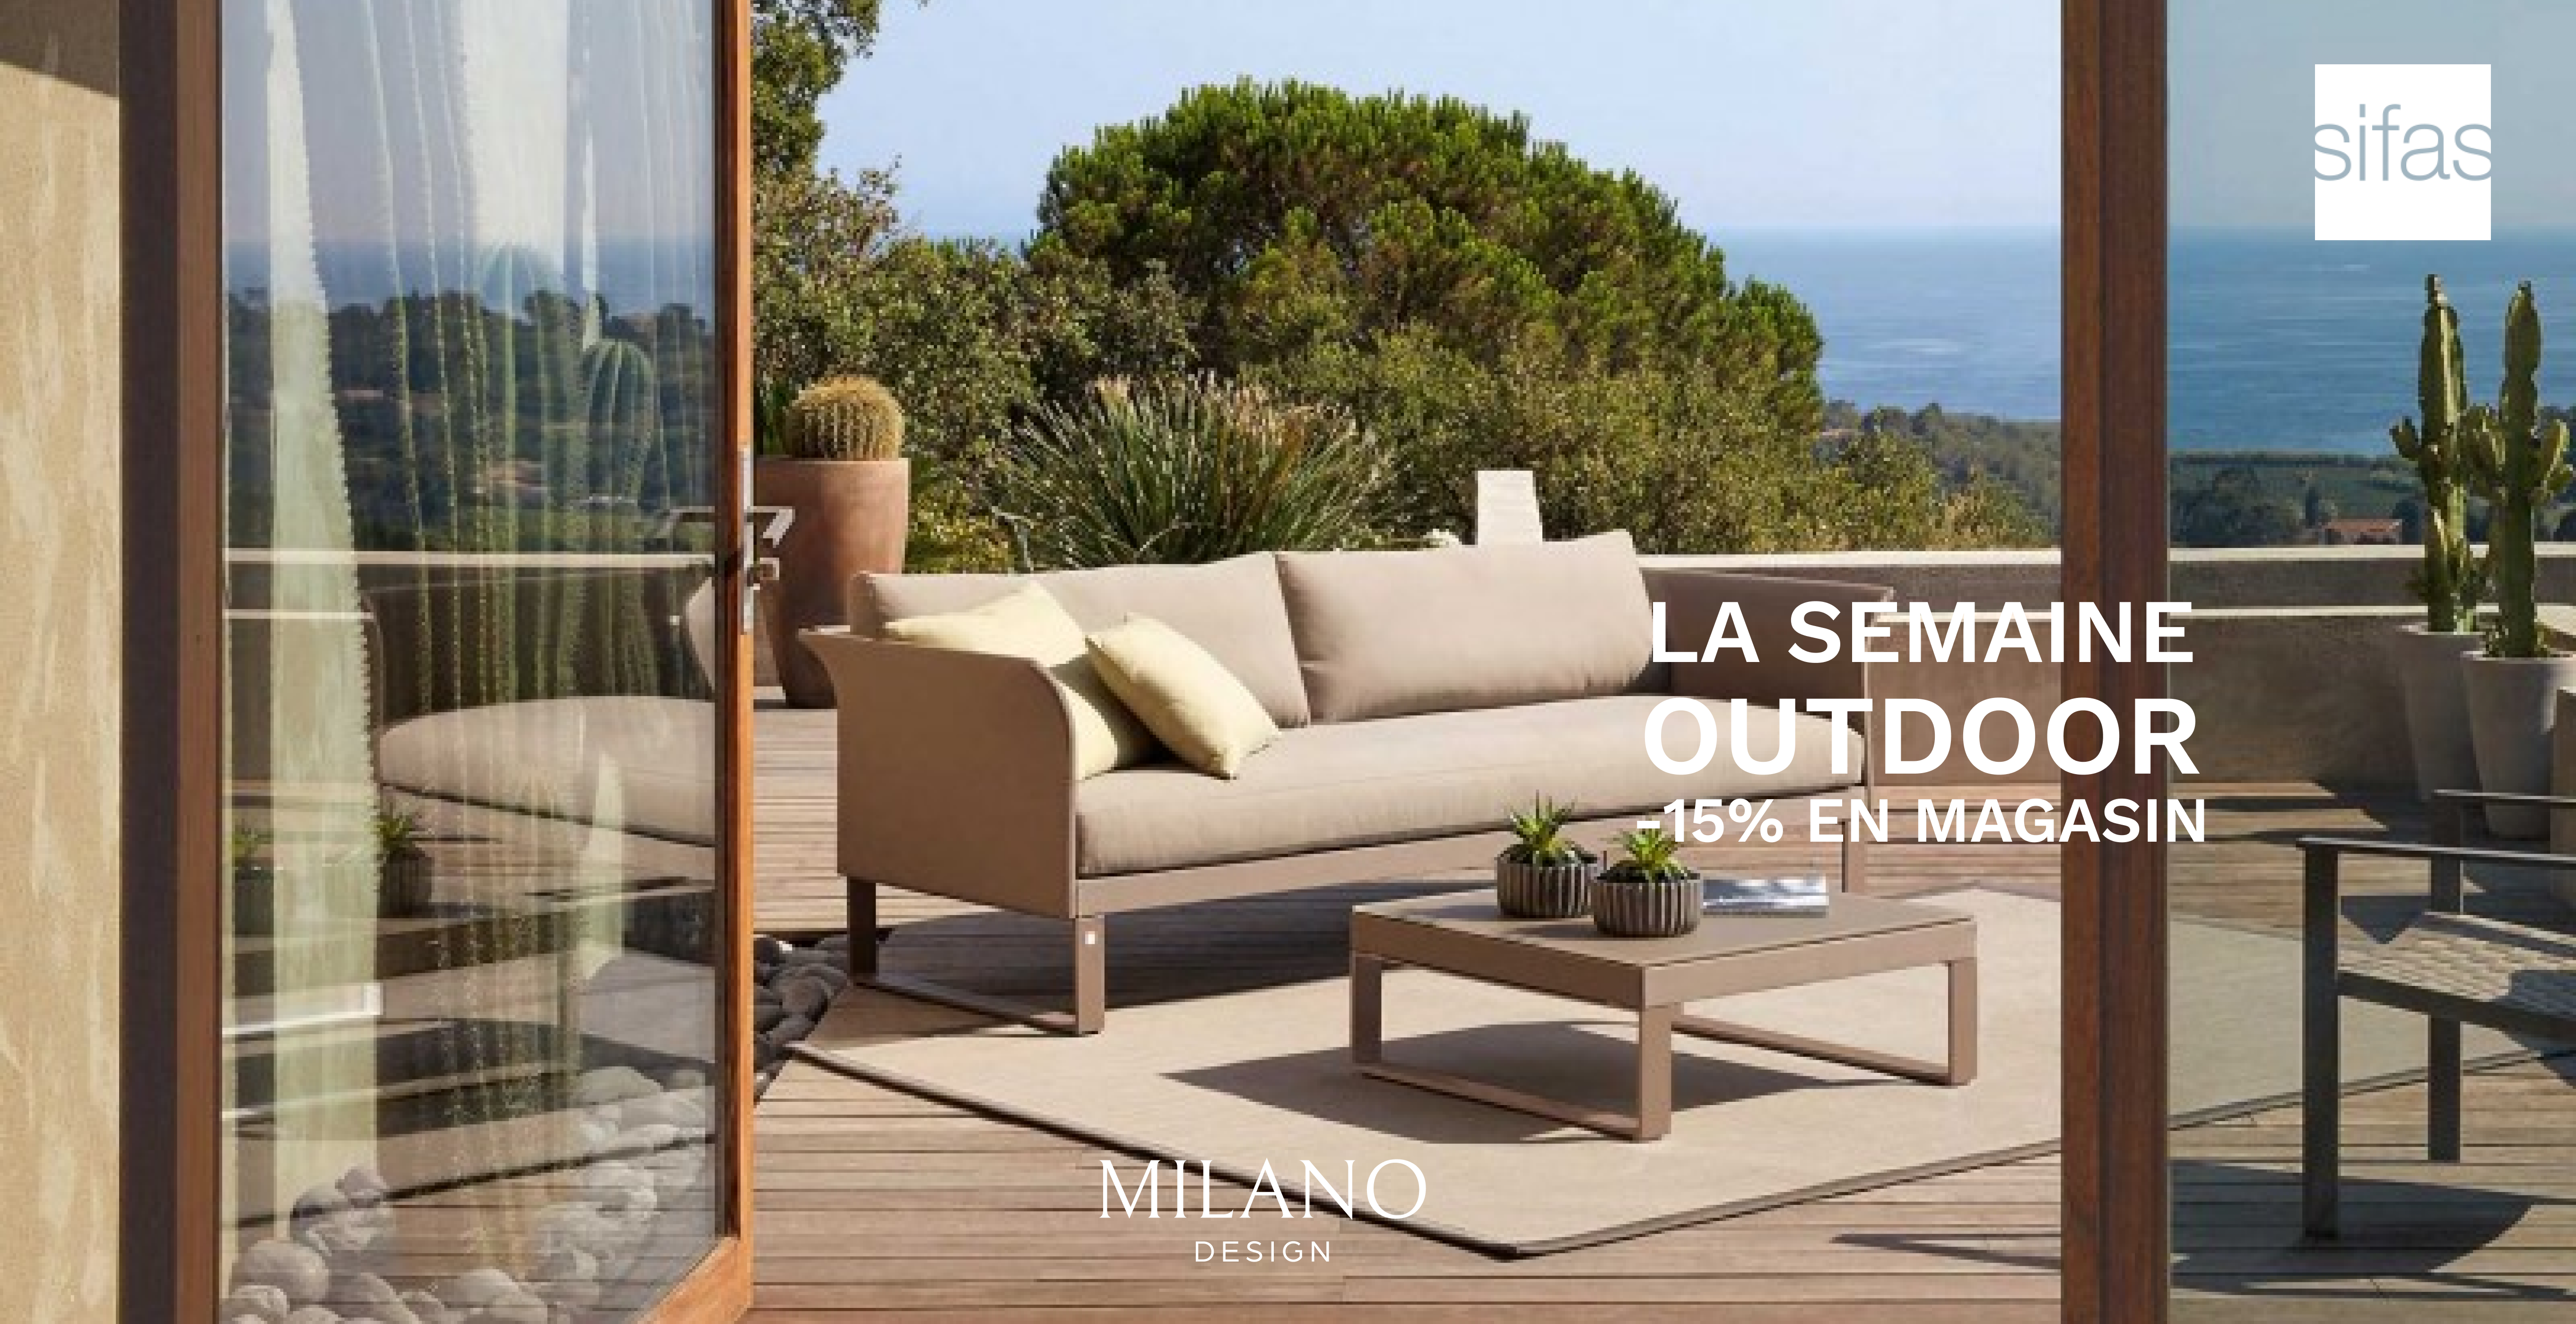 Retrouvez la marque SIFAS chez Milano Design